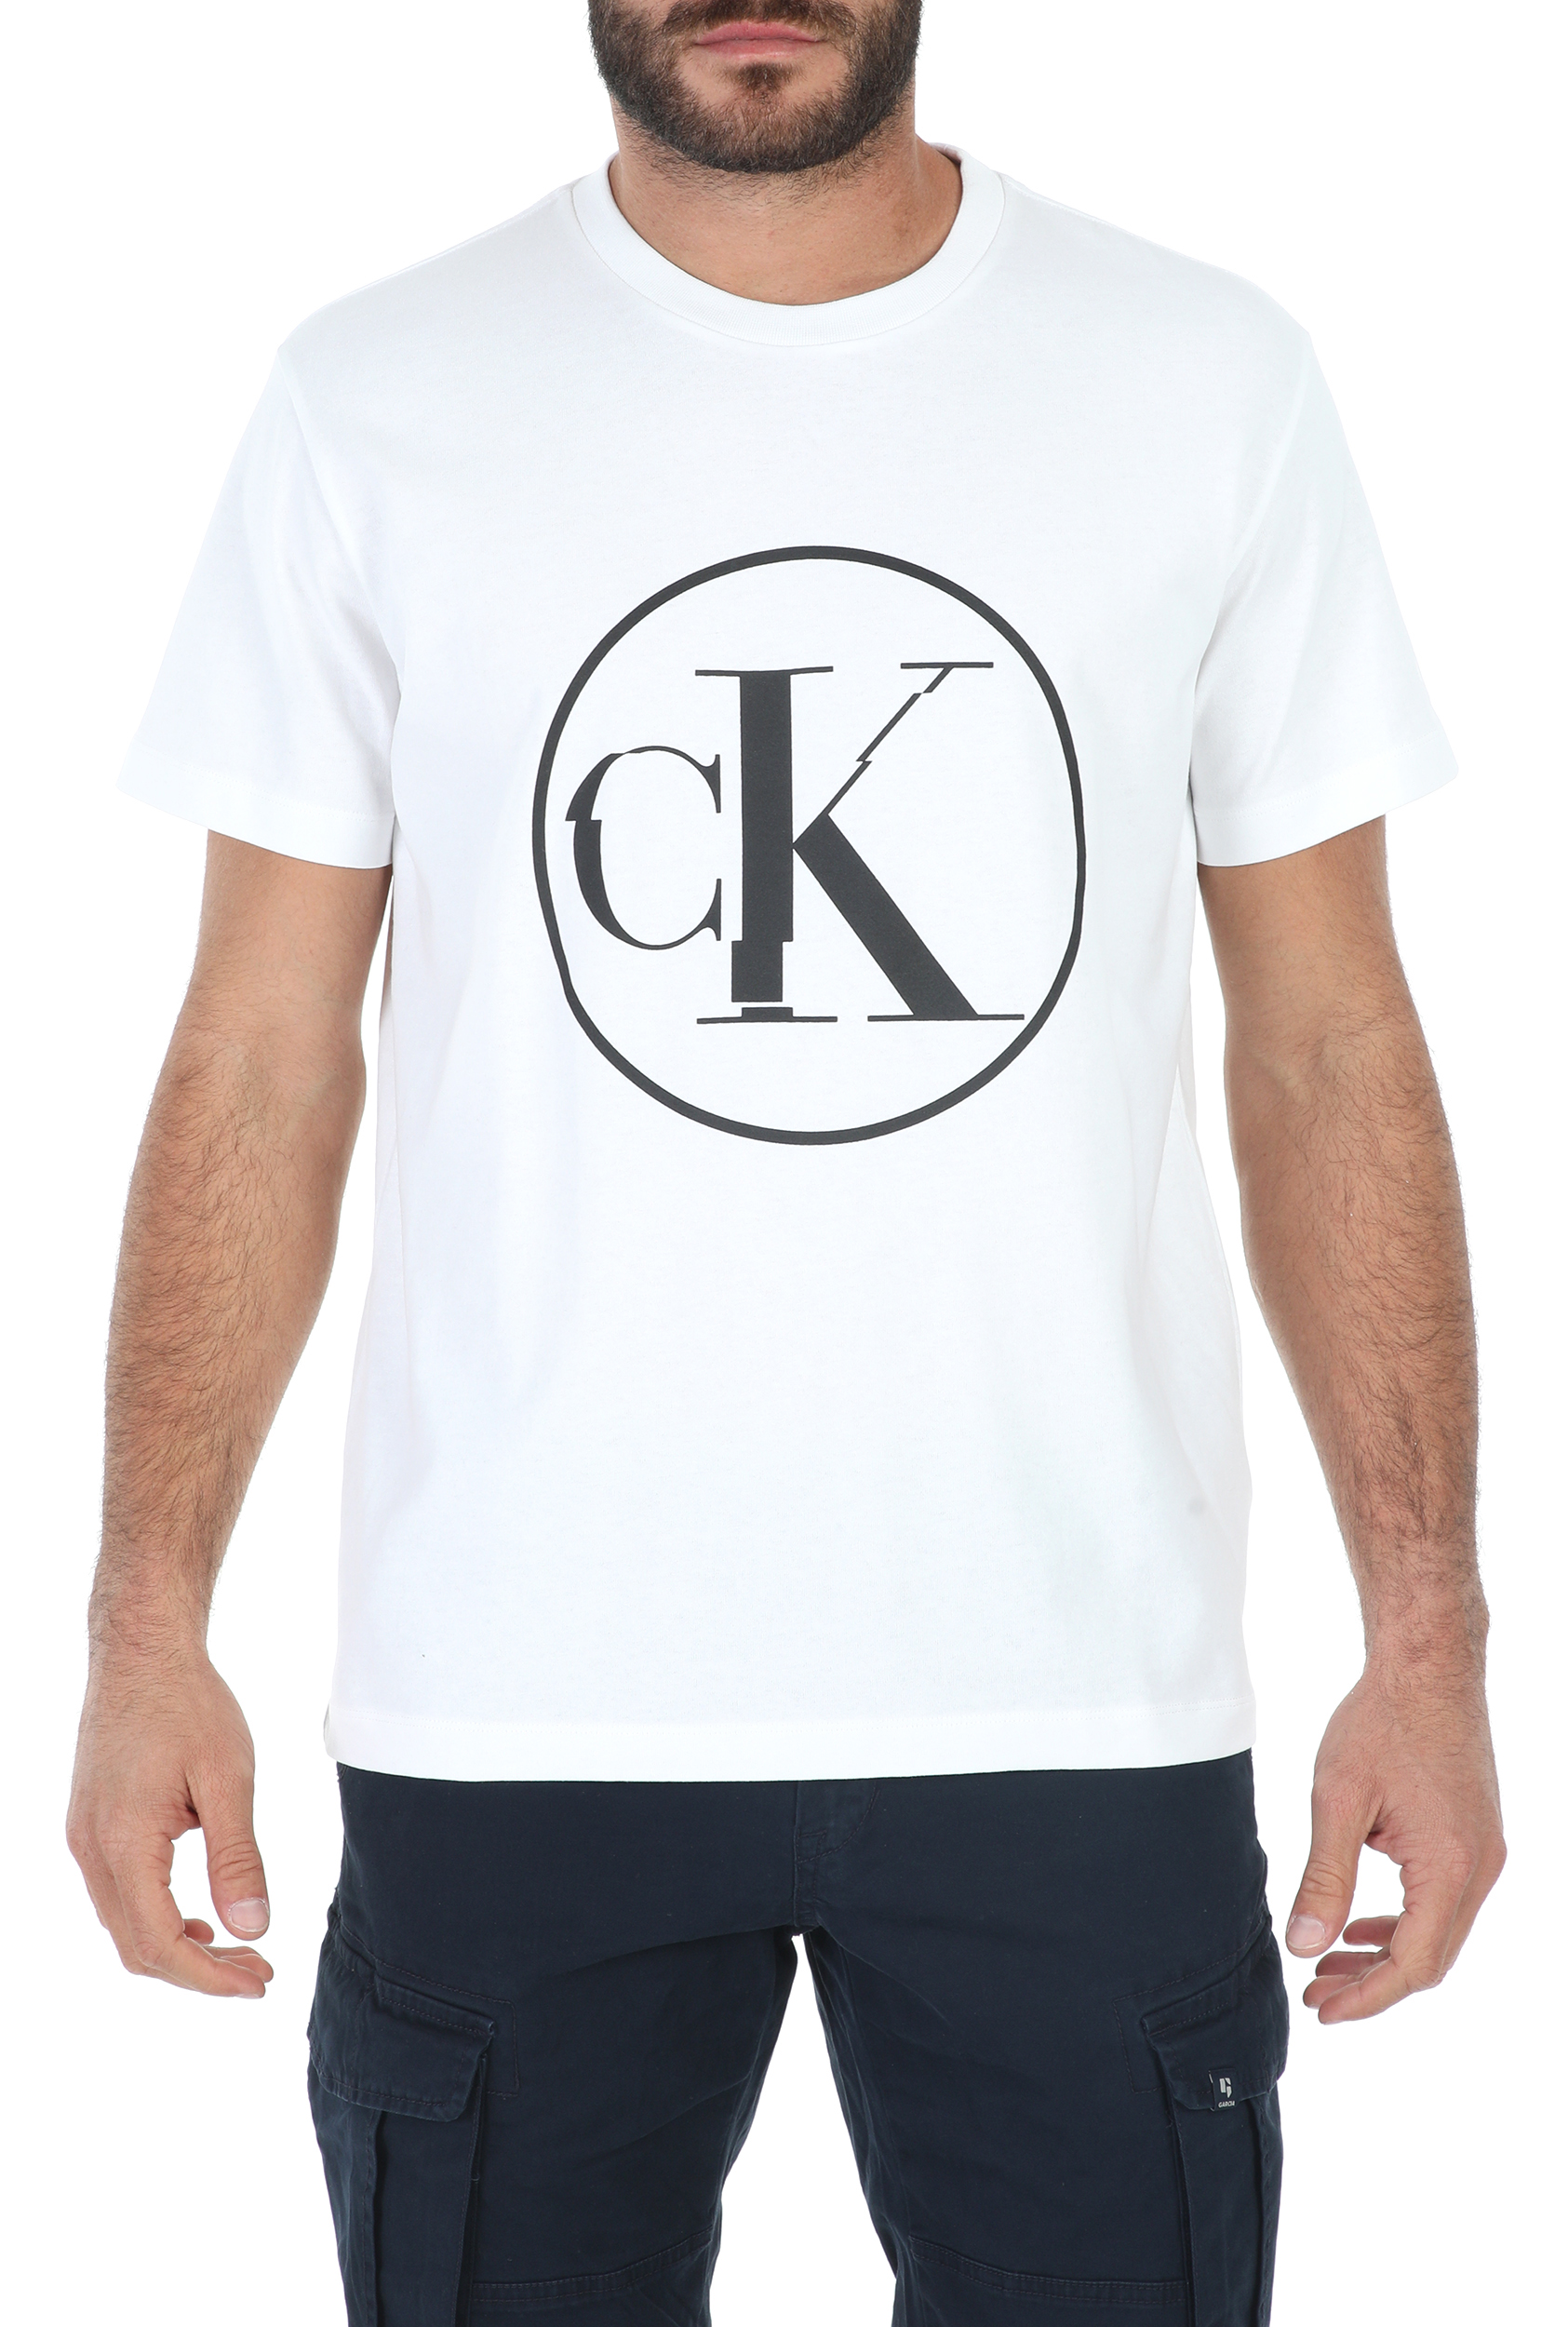 CALVIN KLEIN JEANS – Ανδρικό t-shirt CALVIN KLEIN JEANS ROUND DISTORTED CK λευκό 1800144.0-9292